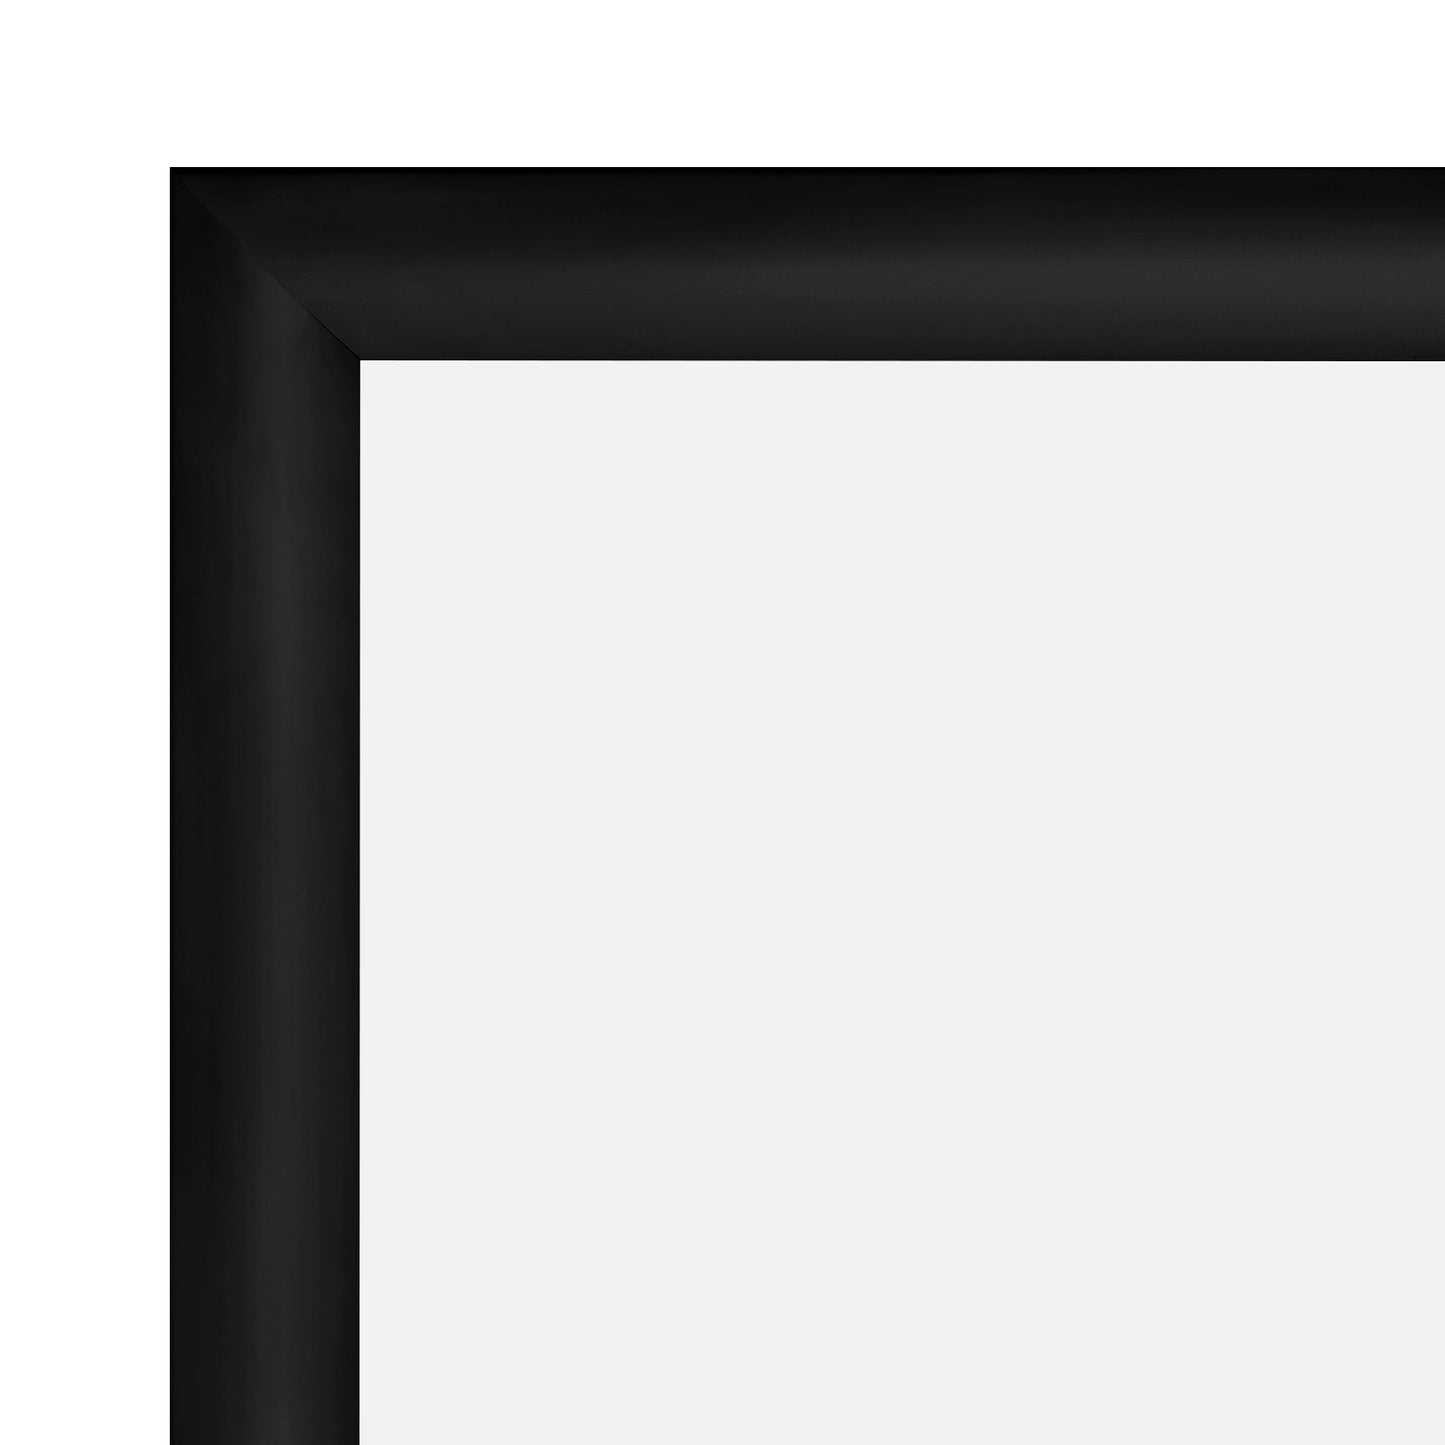 13x24 Black SnapeZo® Snap Frame - 1.2" Profile - Snap Frames Direct